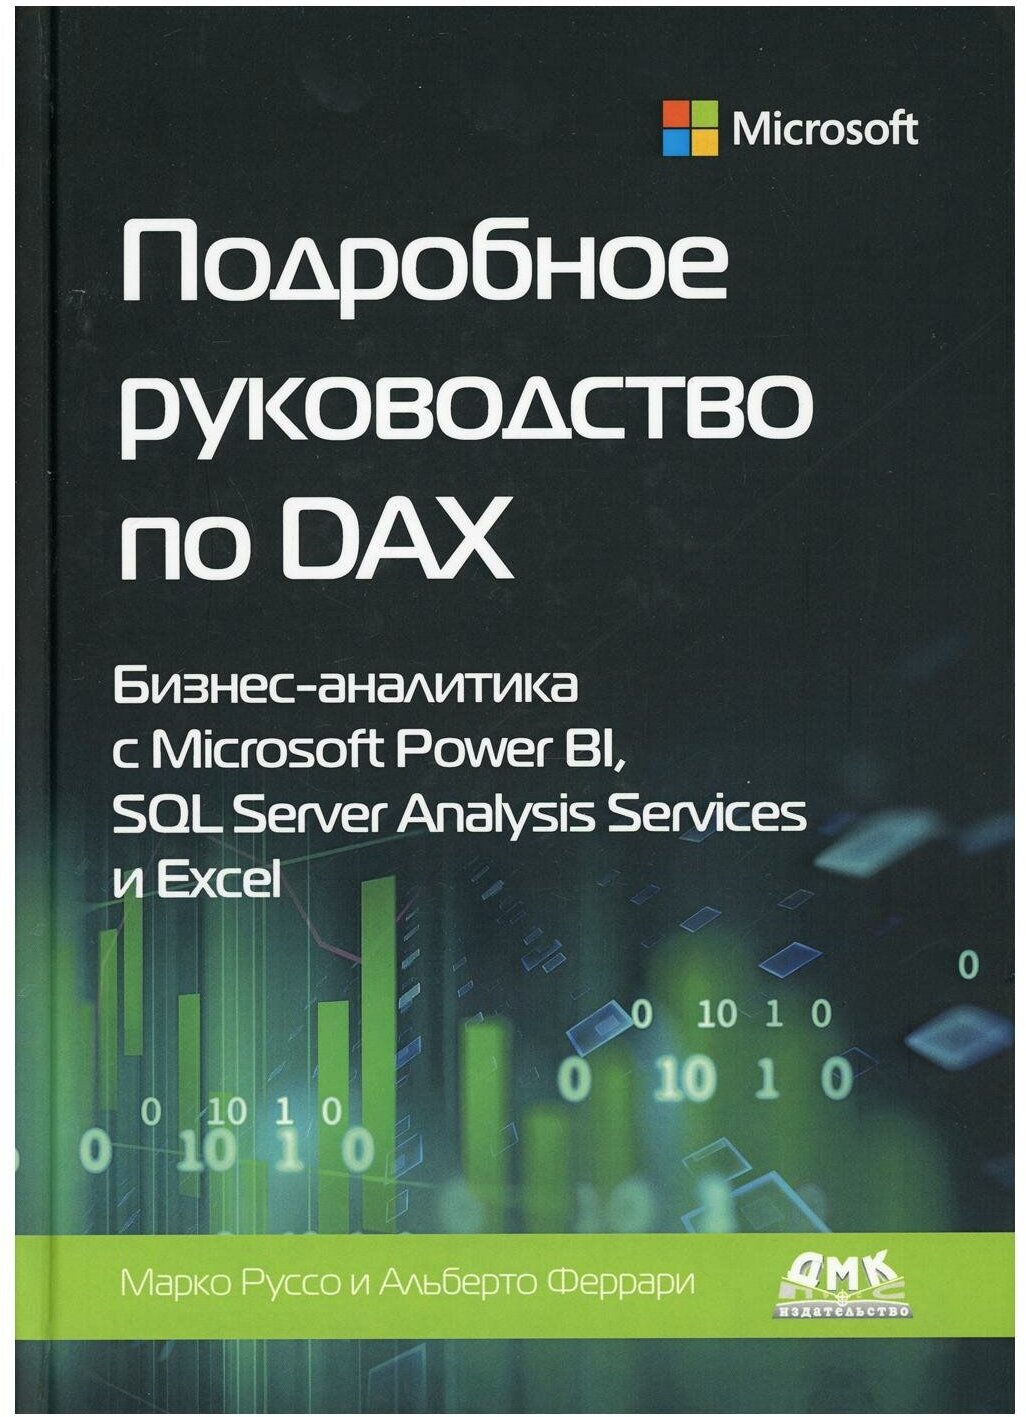 Подробное руководство по DAX: бизнес-аналитика с Microsoft Power Bl, SQL Server Analysis Services - фото №1